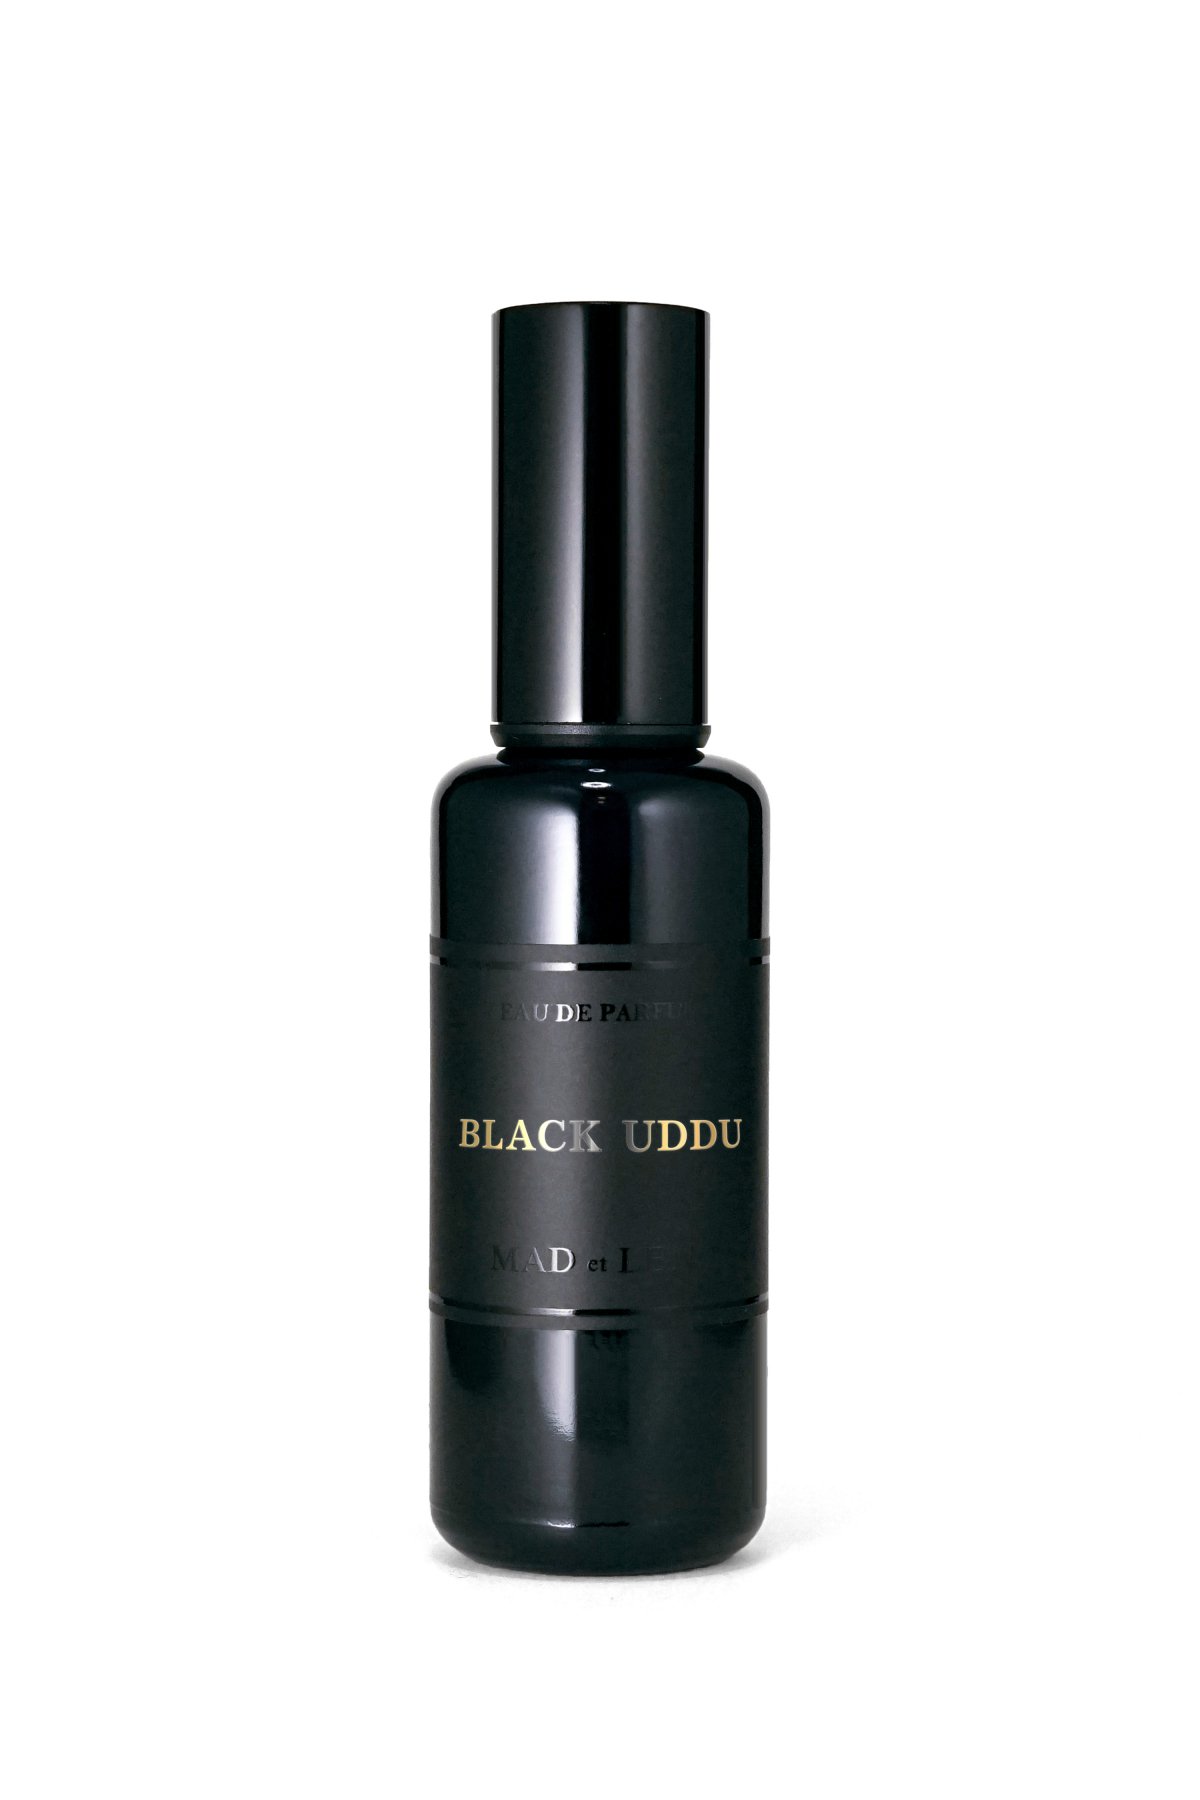 MAD et LEN - Eau de Parfum - BLACK UDDU - 50ml　マドエレン パフューム フレグランス 通販 正規店  フェートン - Phaeton Smart Clothes Online Store